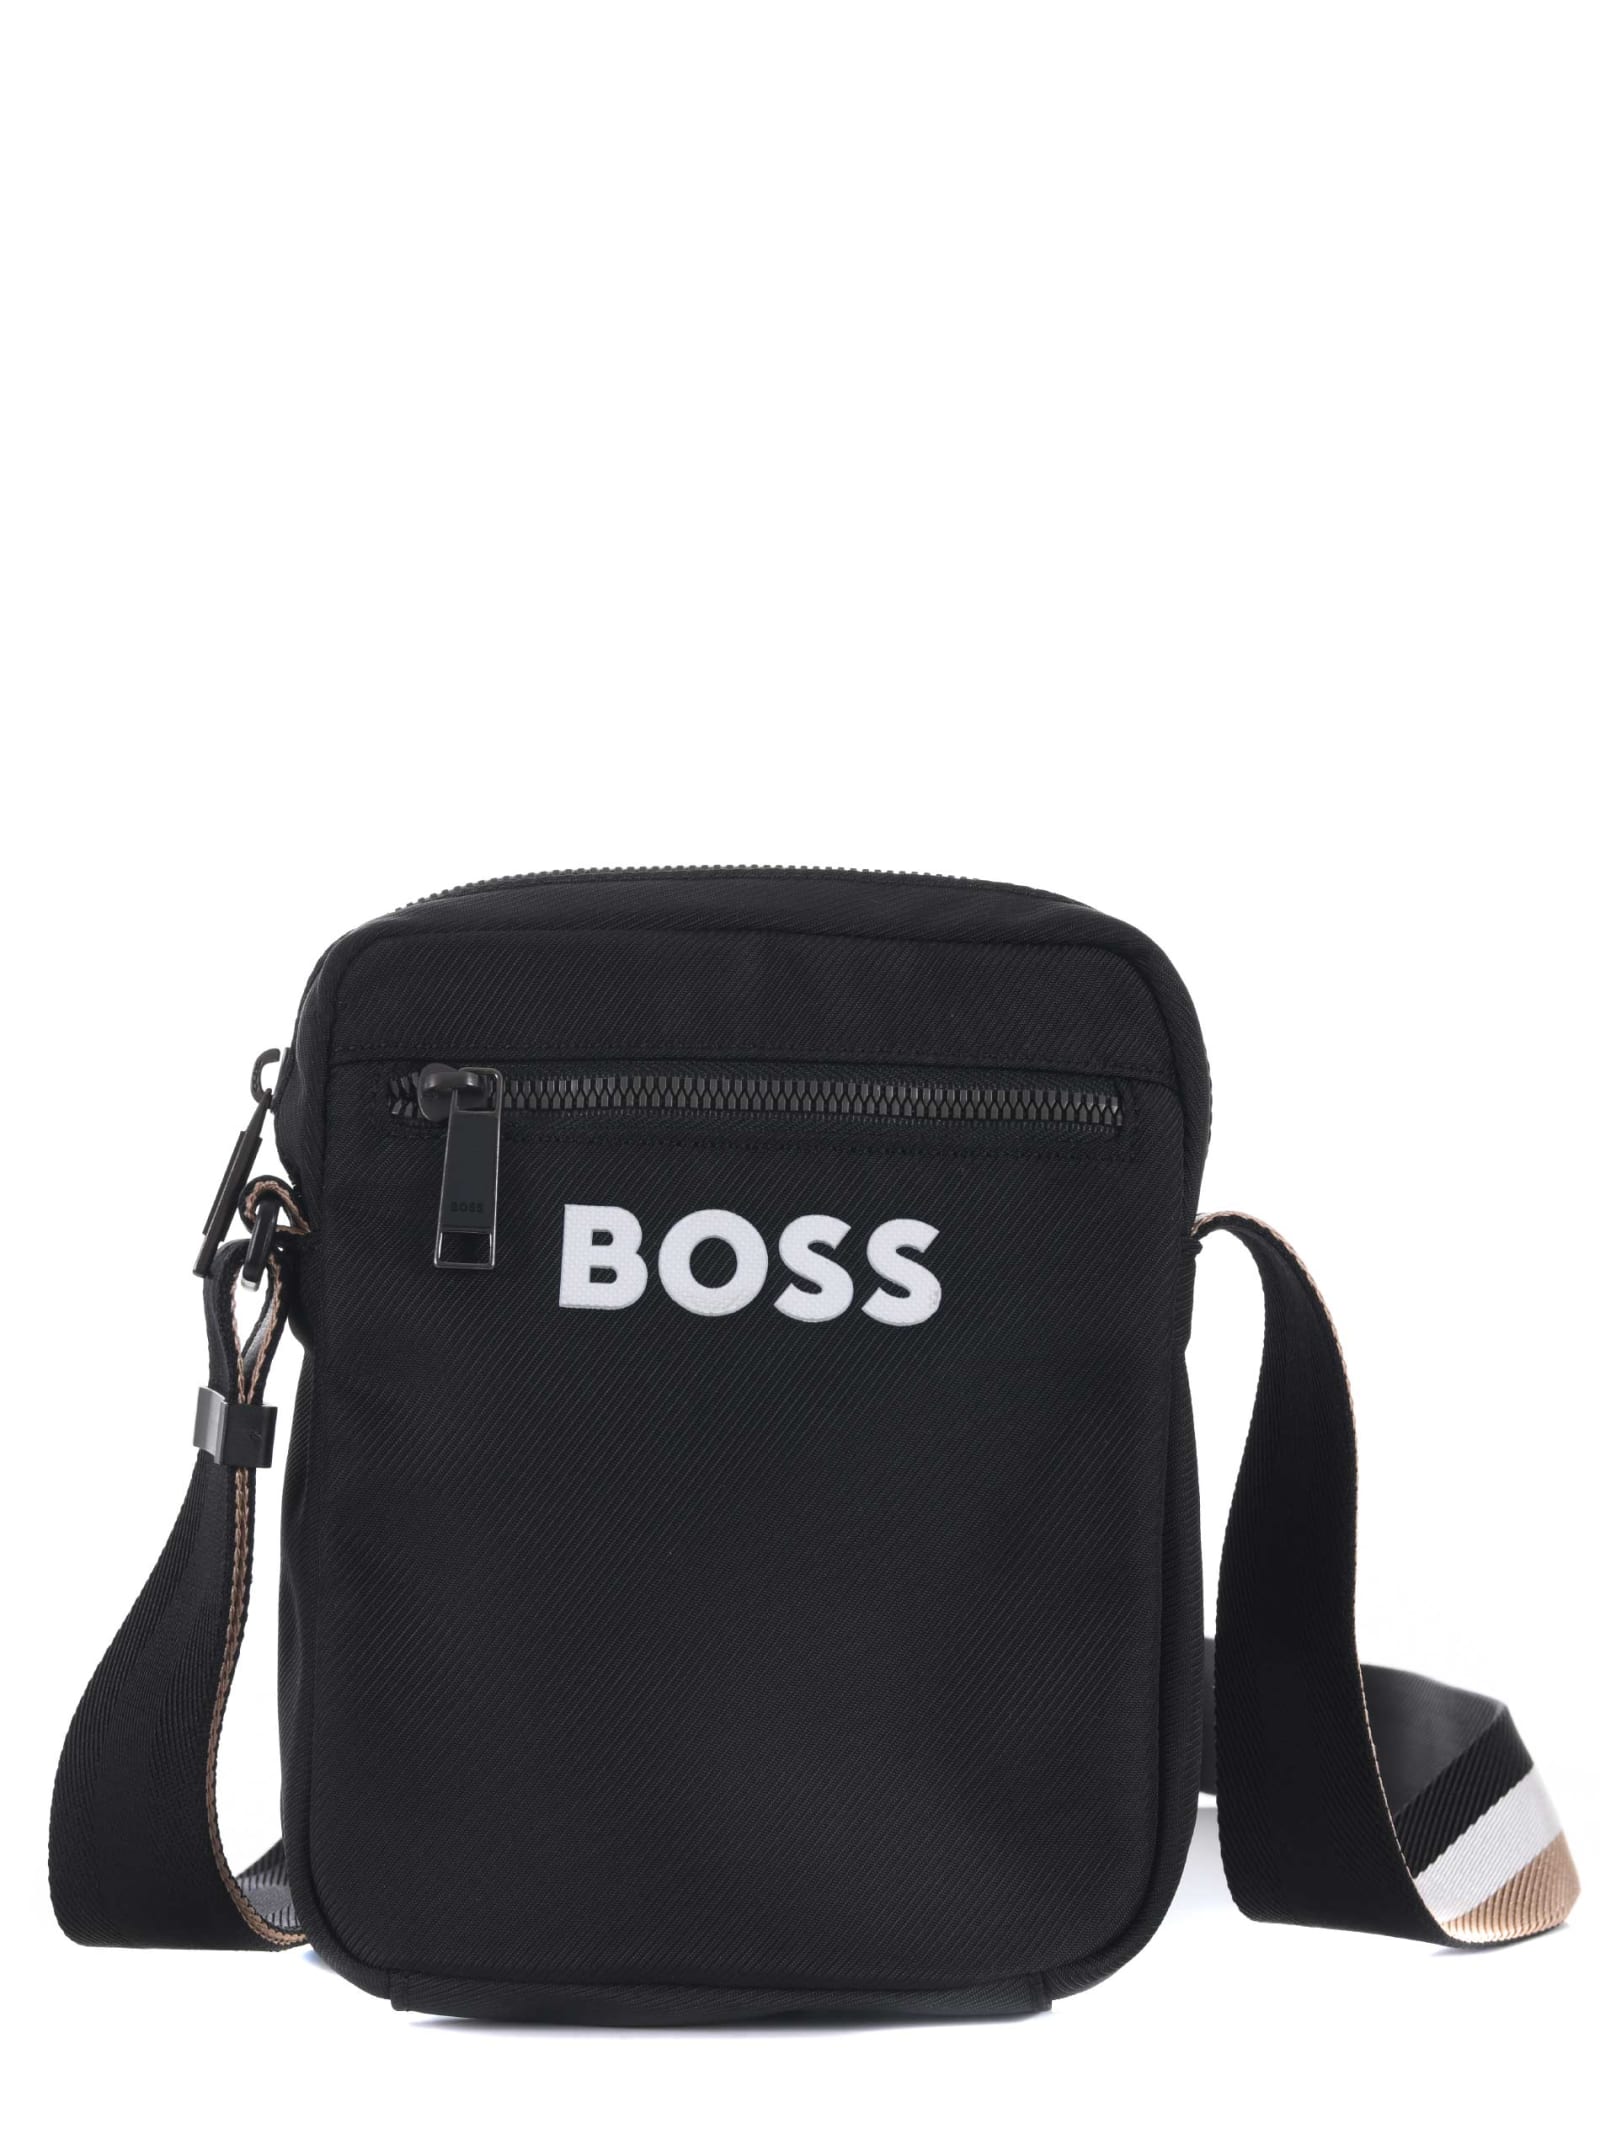 Hugo Boss Boss Shoulder Bag In Nero